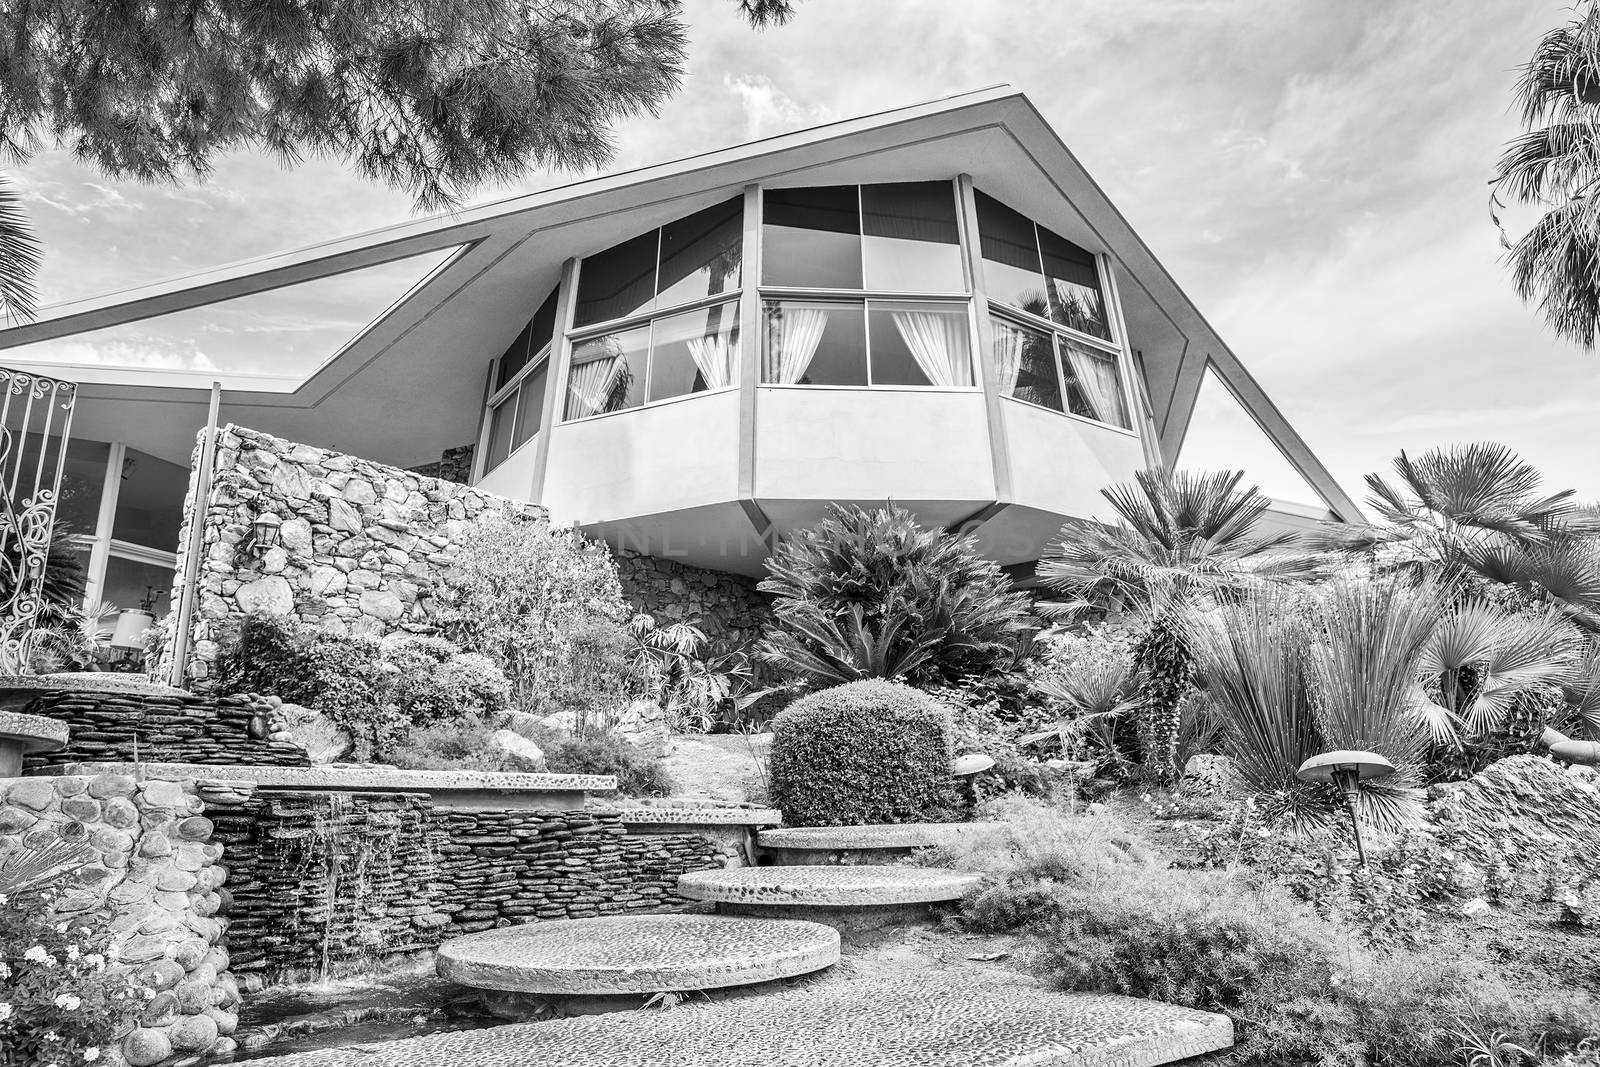 Modernistic Elvis Presley Honeymoon Home in Black and White by Creatista